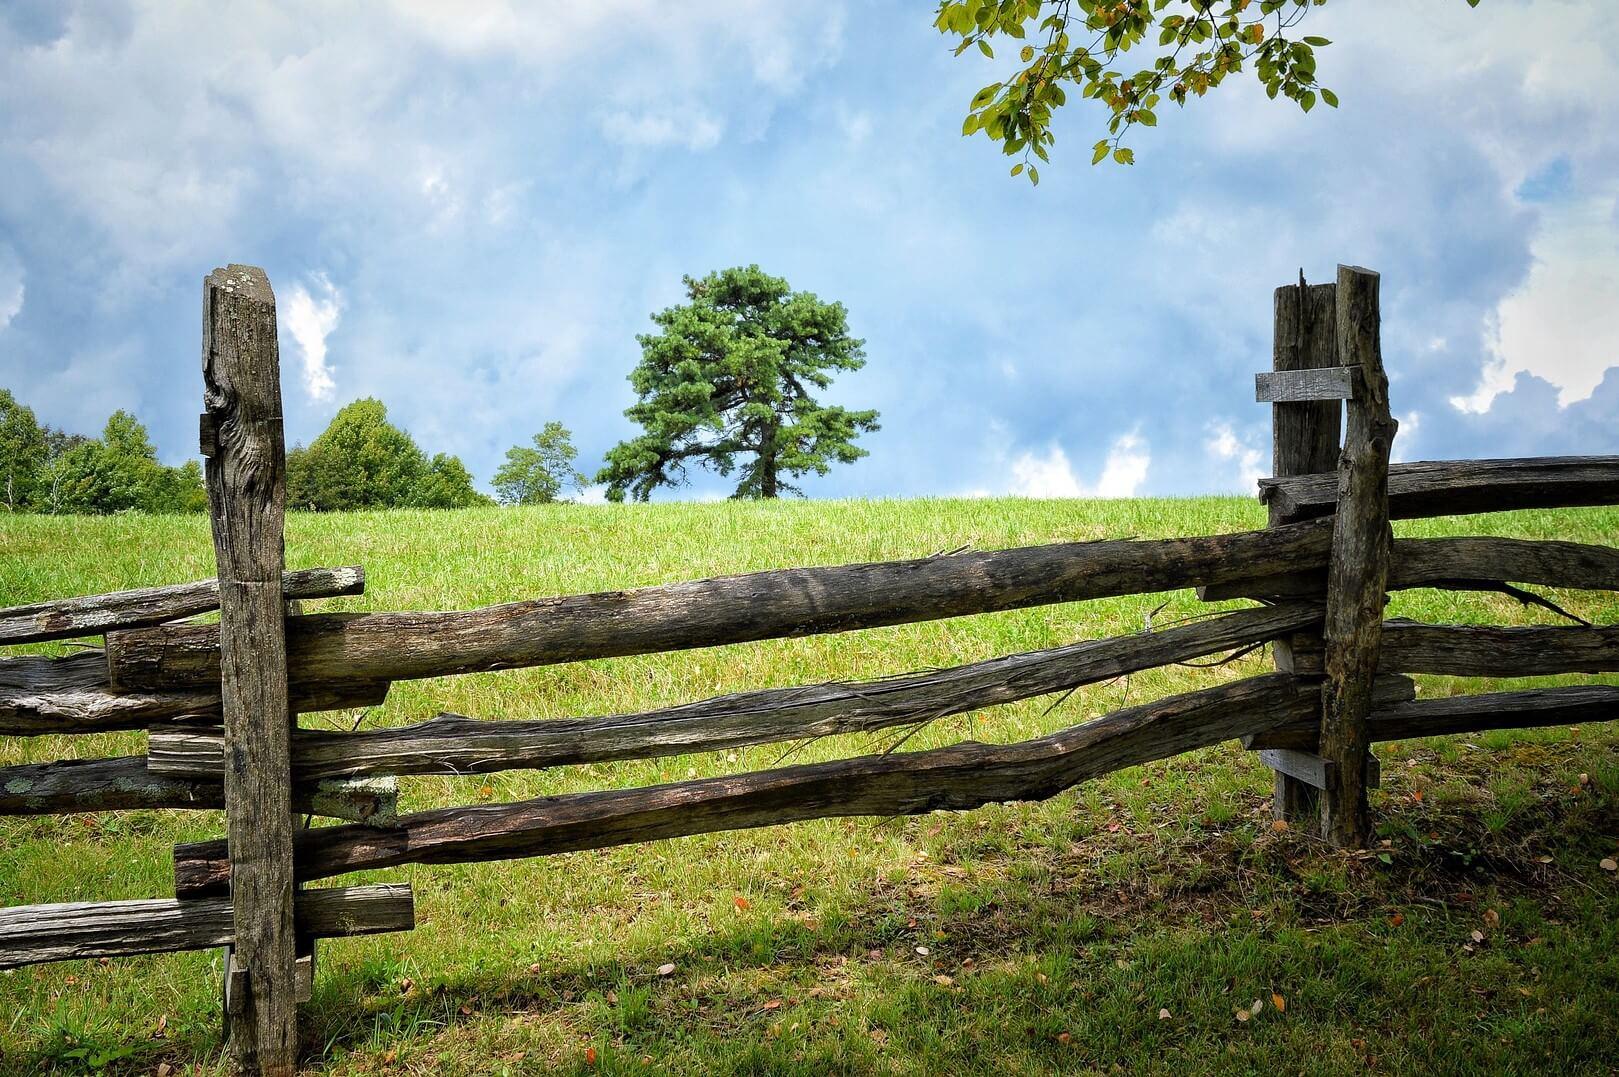 Split rail fence in front of a grassy field